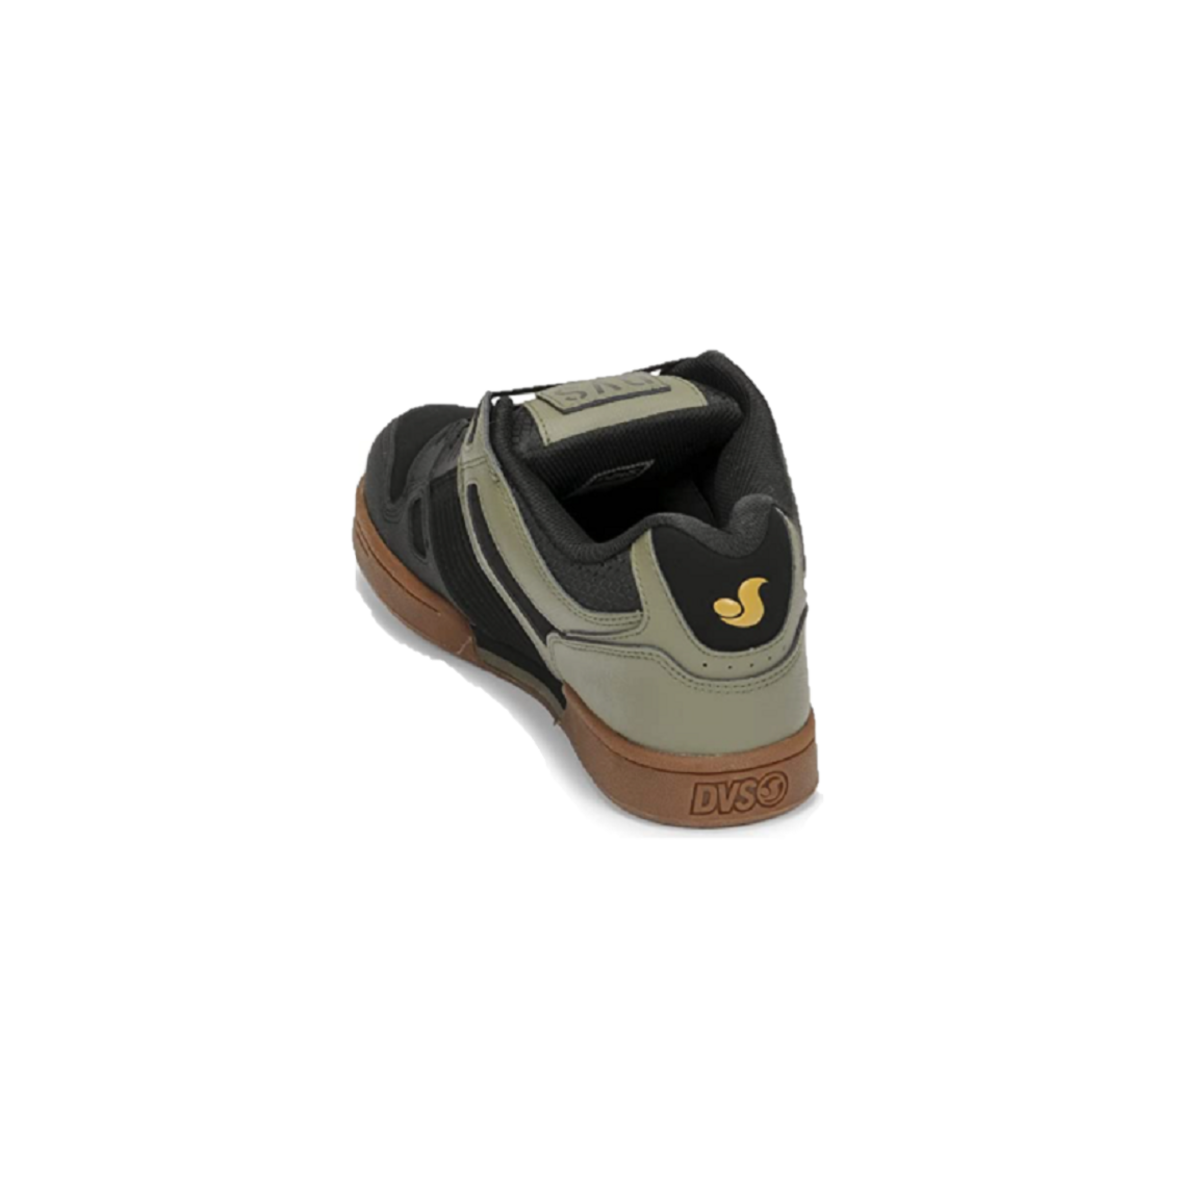 DVS F0000233966 CELSIUS MN'S (Medium) Black/Olive/Gum Suede/Leather/Nubuck Skate Shoes